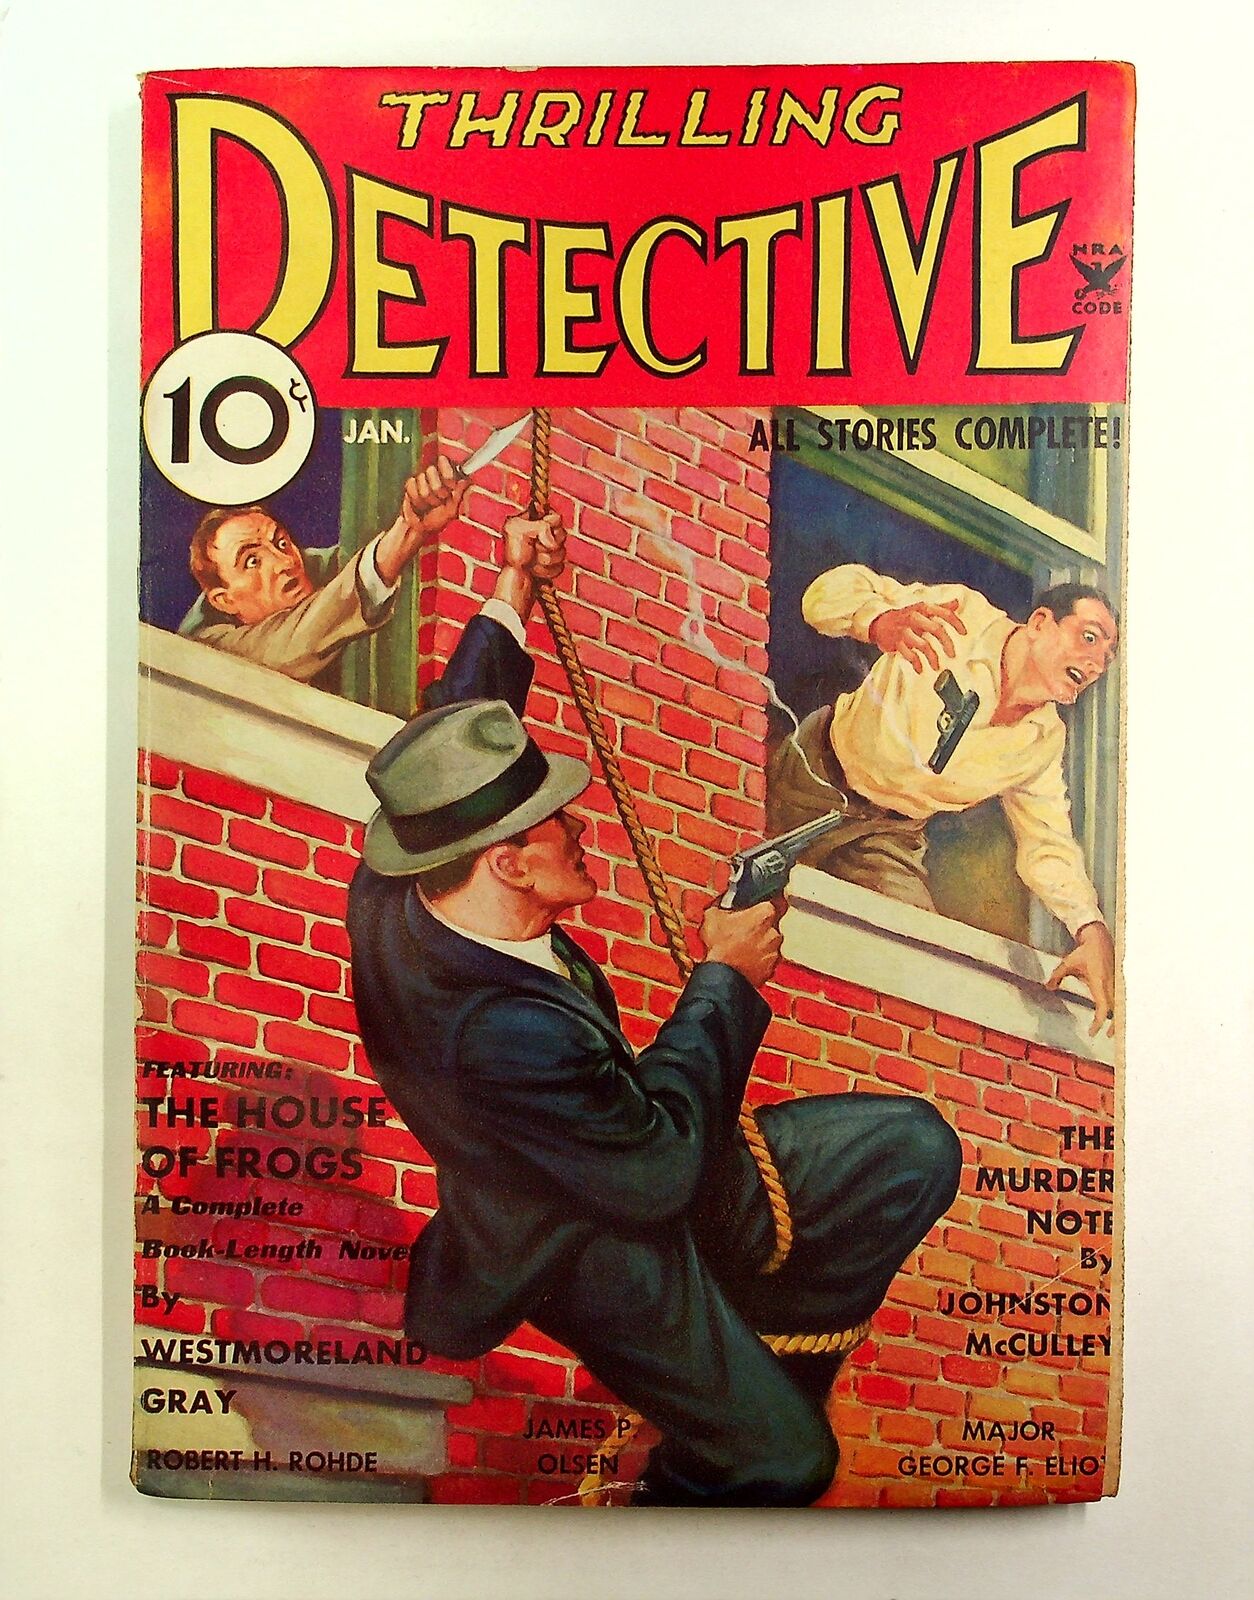 Thrilling Detective Pulp Jan 1935 Vol. 13 #2 VG- 3.5 TRIMMED